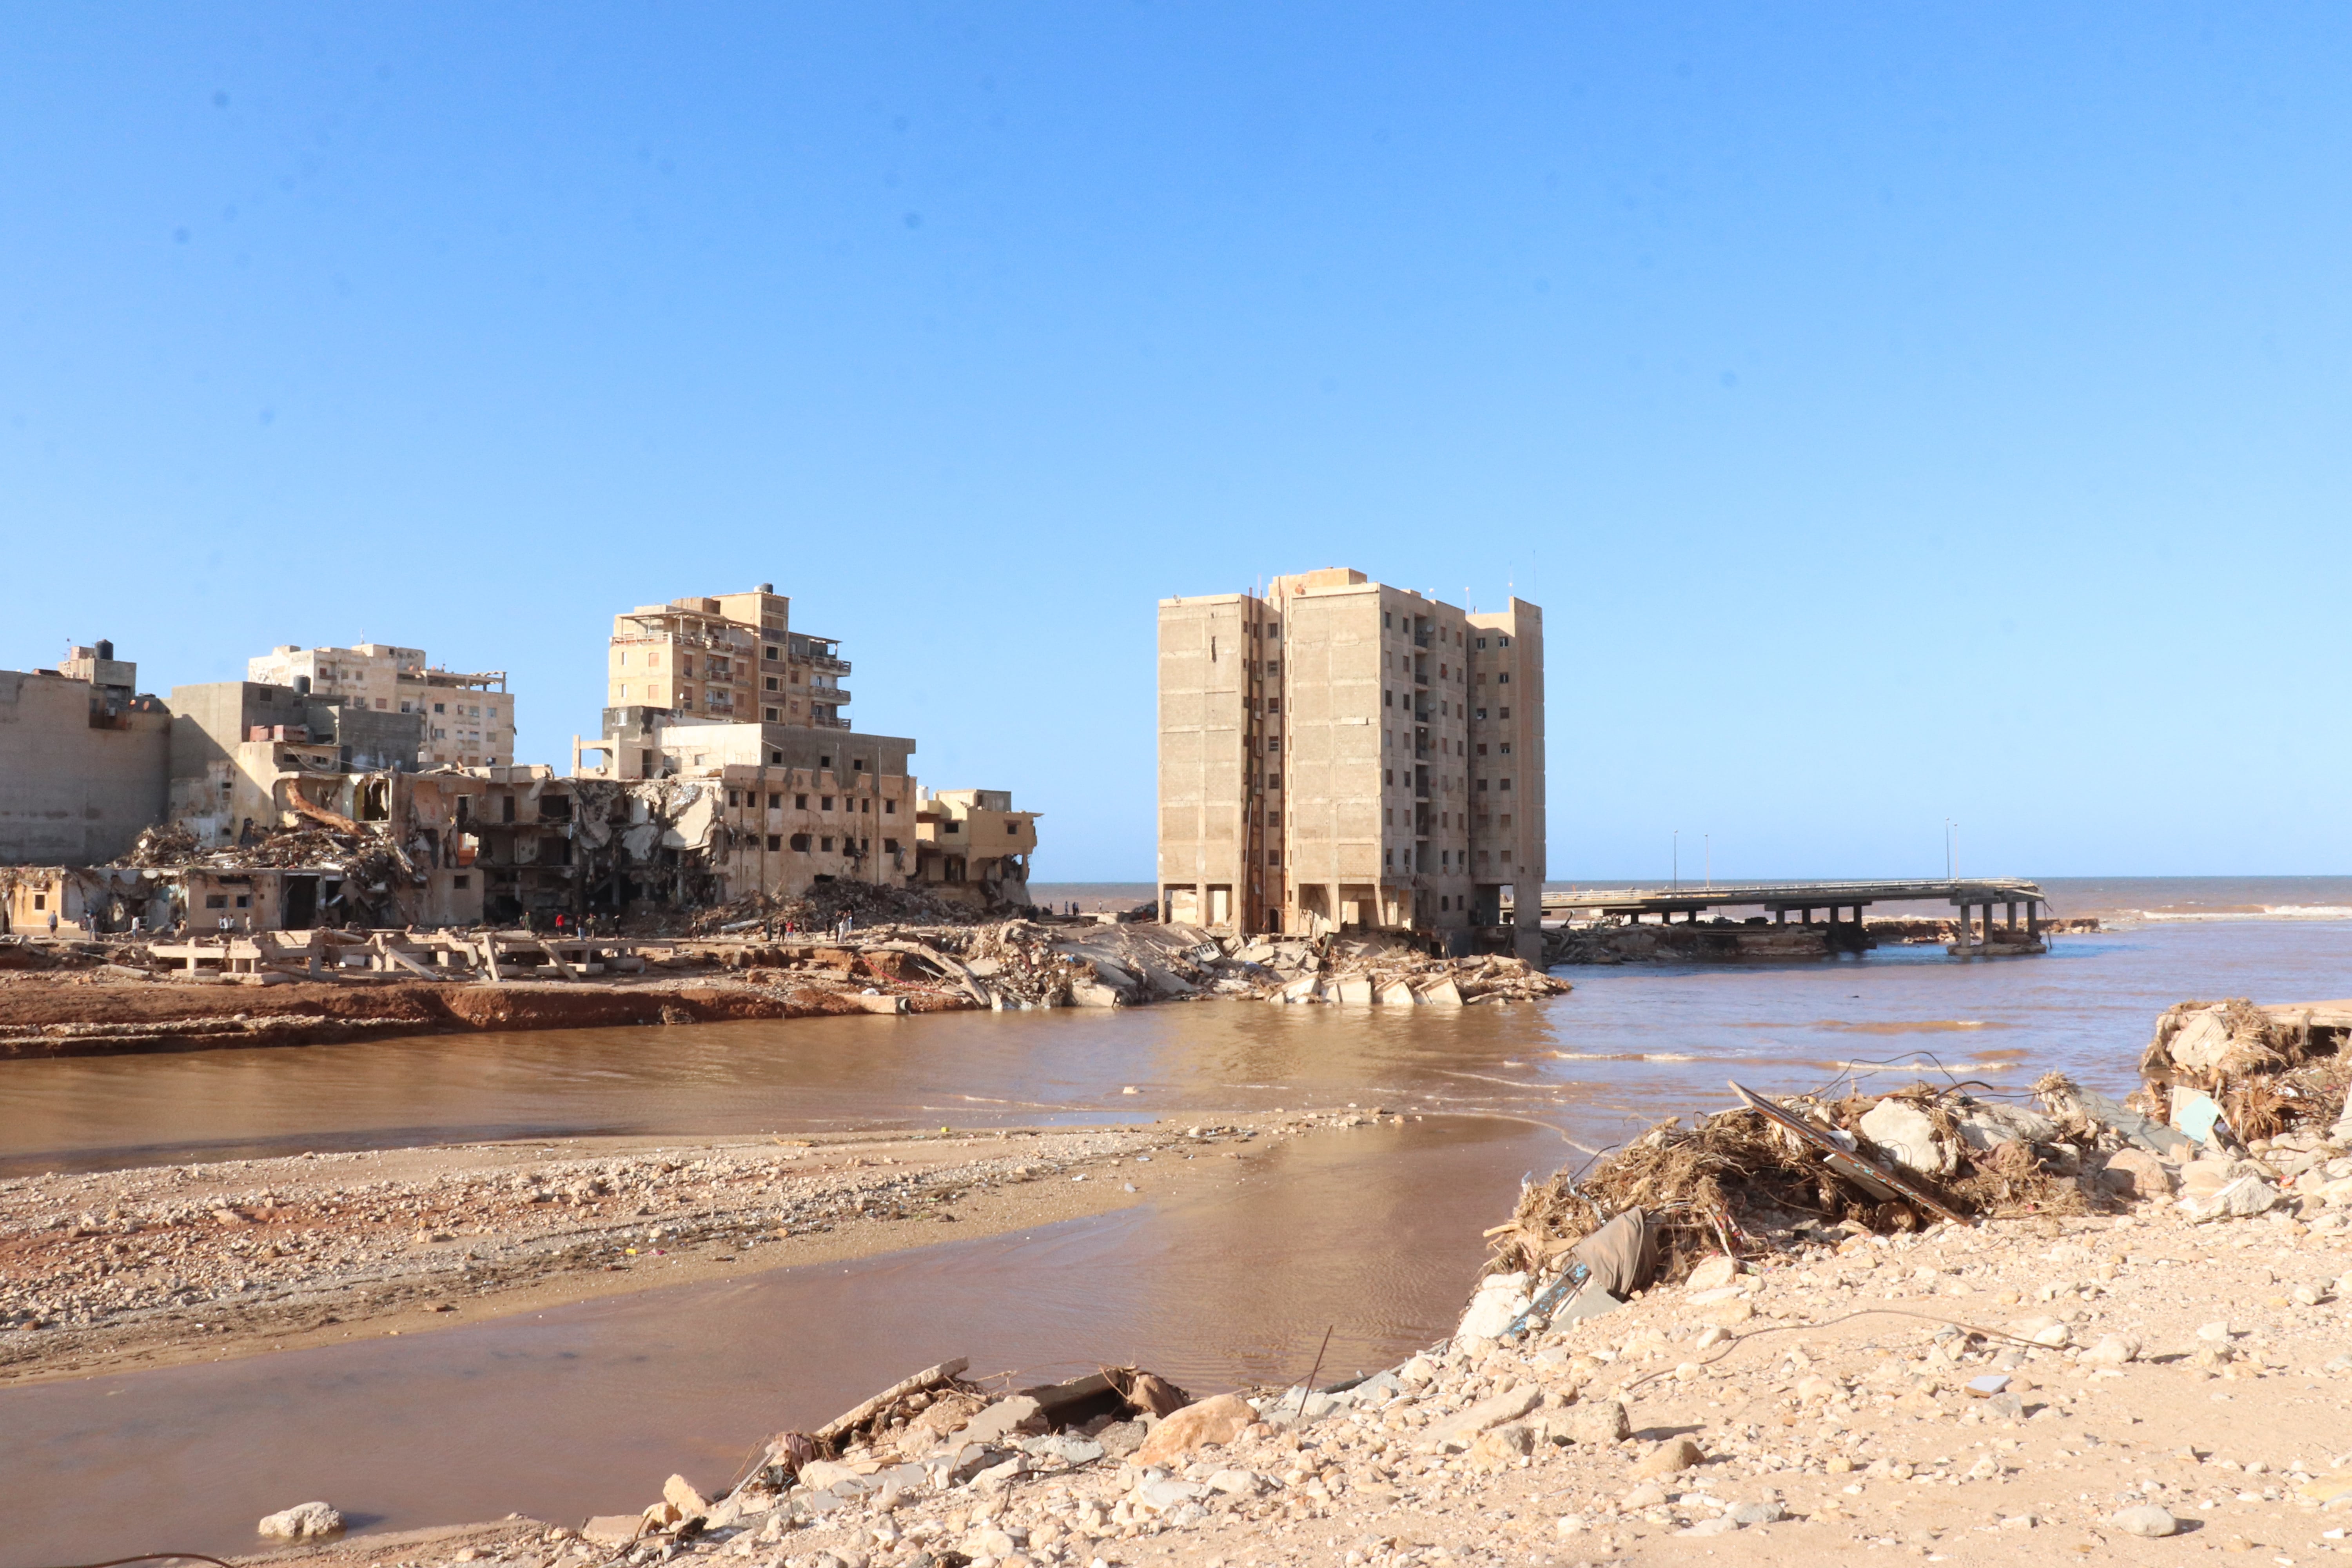 aa-20230912-32136282-32136260-death-toll-in-libya-floods-rises-to-5300-min.jpg